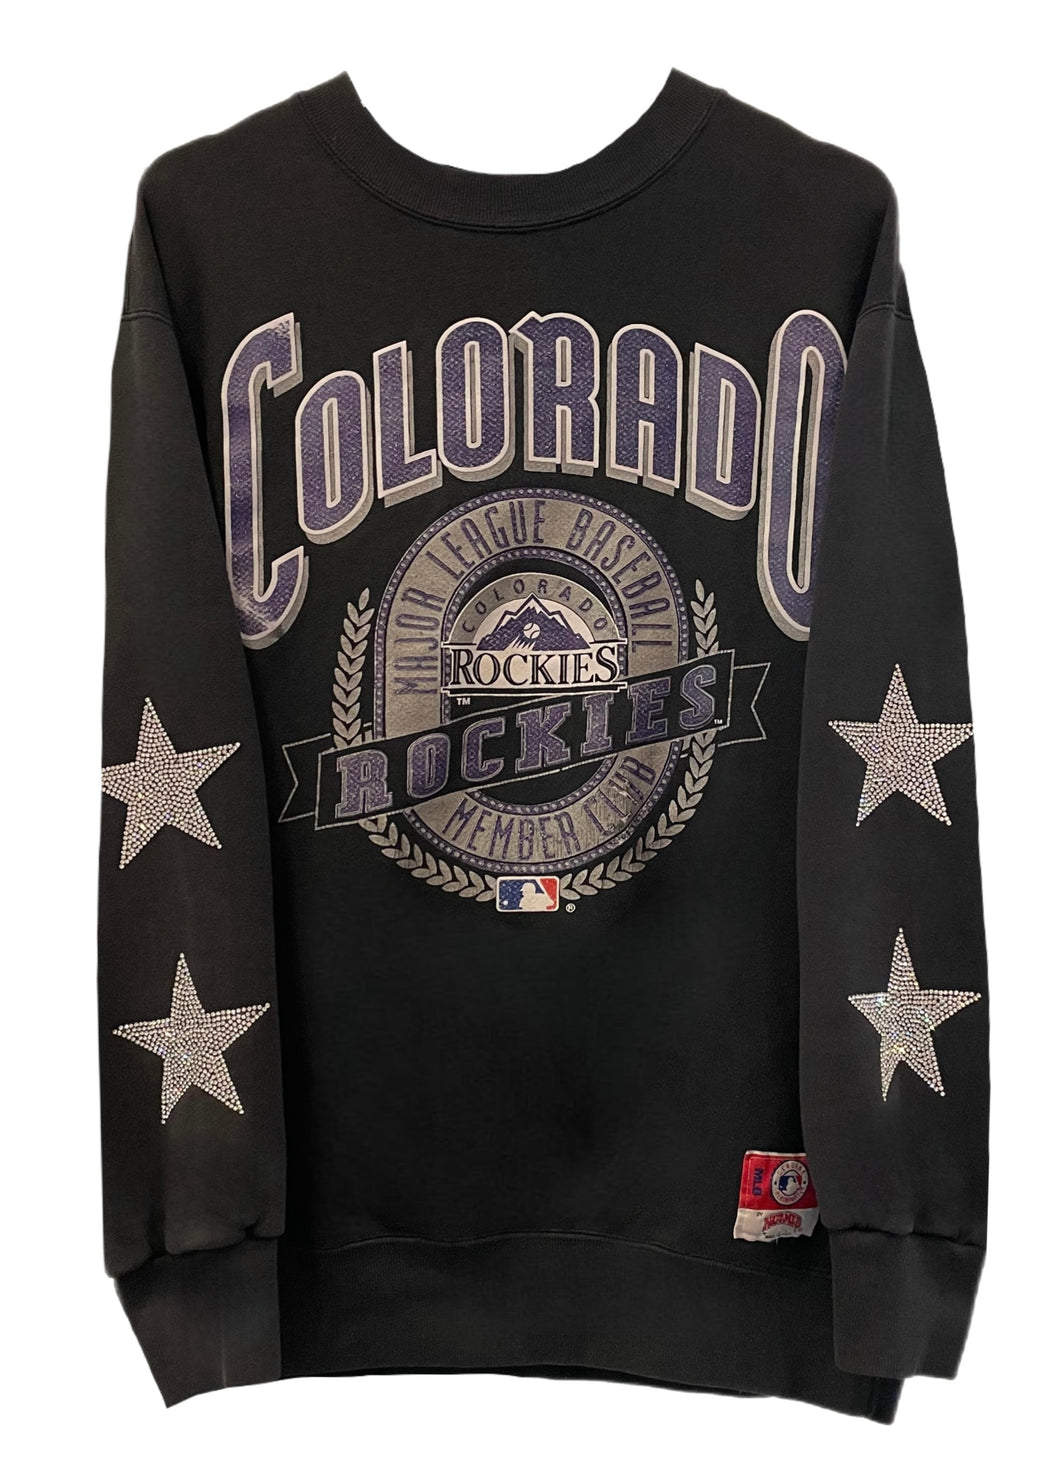 Colorado Rockies, MLB One of a KIND Vintage Sweatshirt with Crystal Star Design